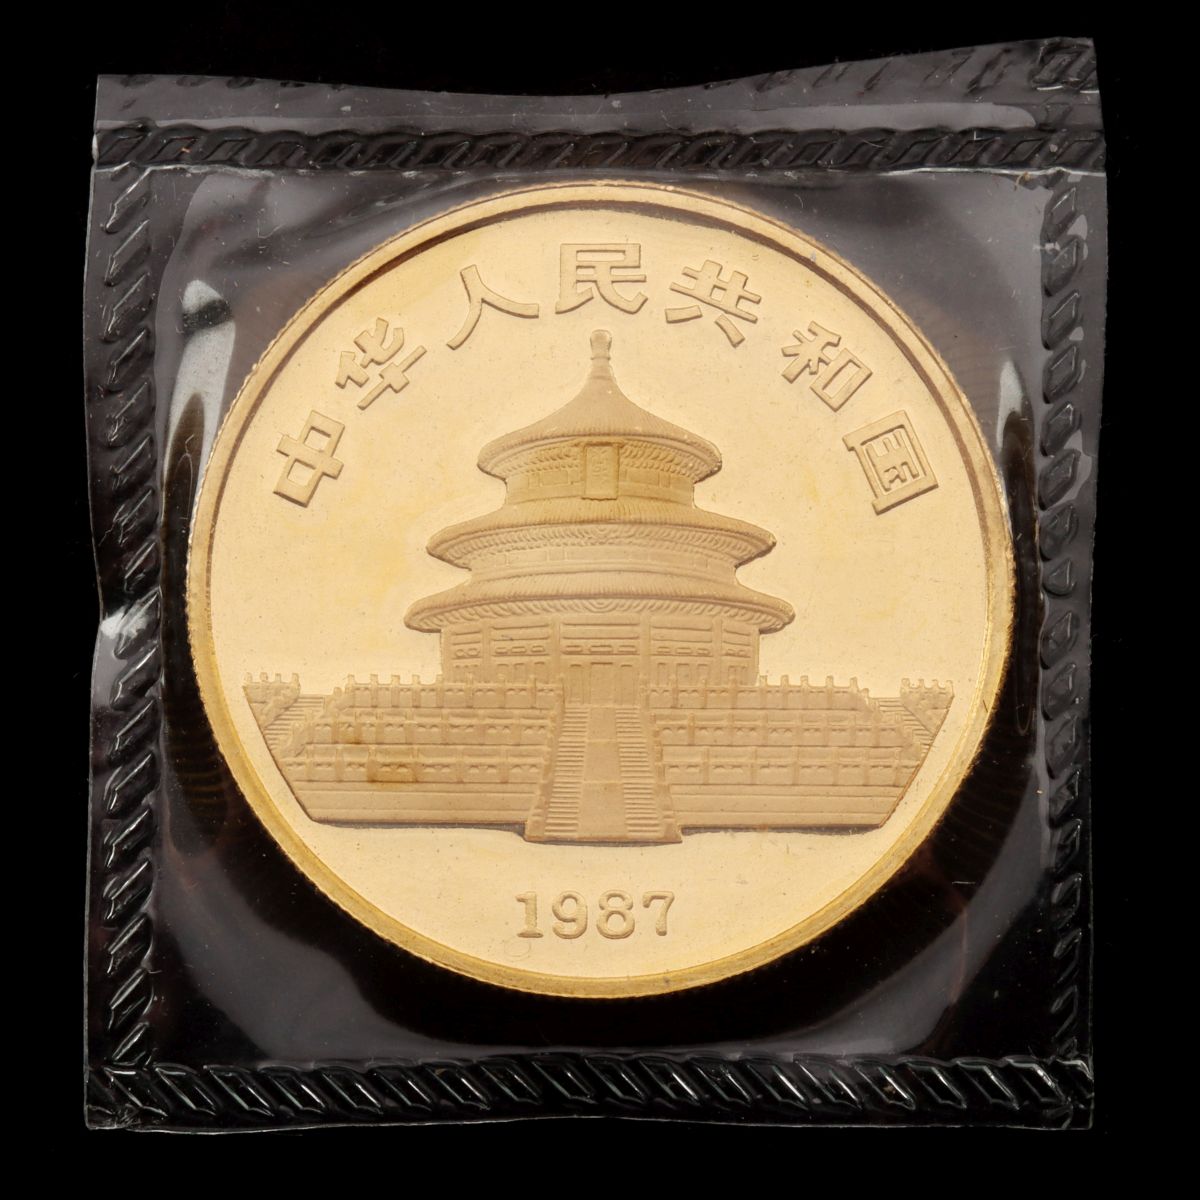 A 1987 CHINESE 1 OZ. GOLD PANDA COIN